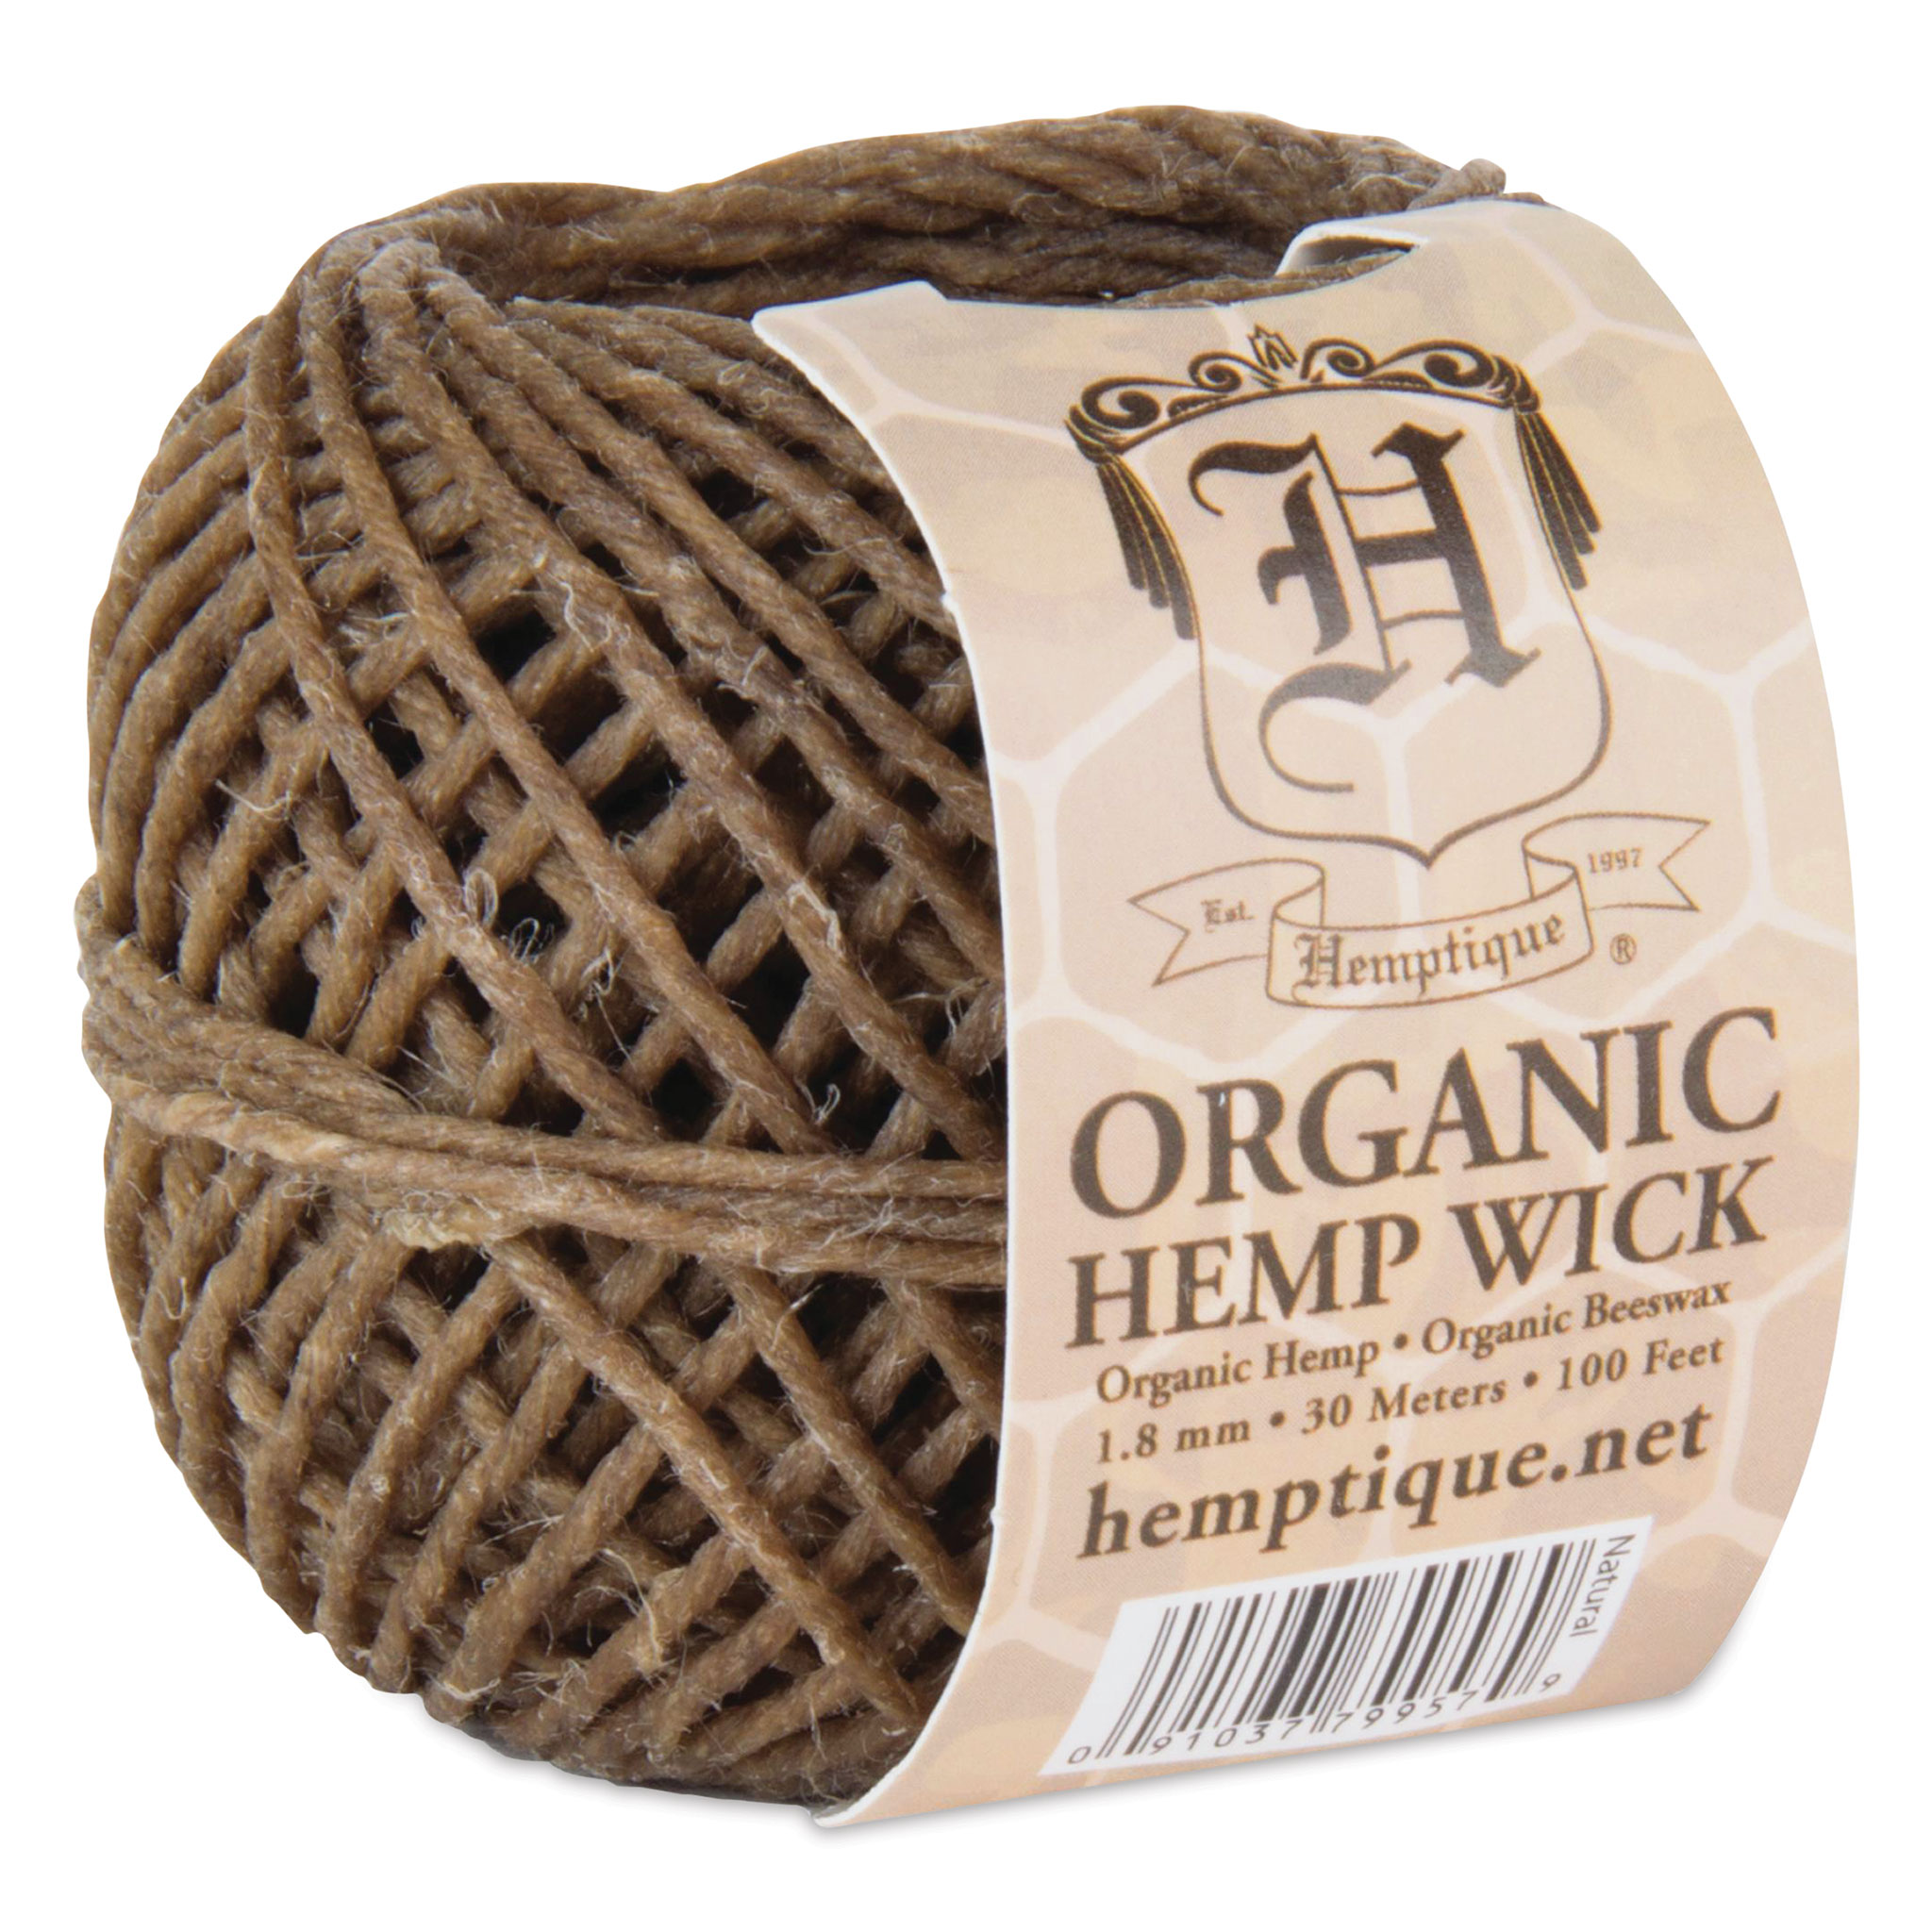 Hemptique Organic Beeswax Hemp Wick Balls in Rasta | 1.8mm/200ft | Michaels